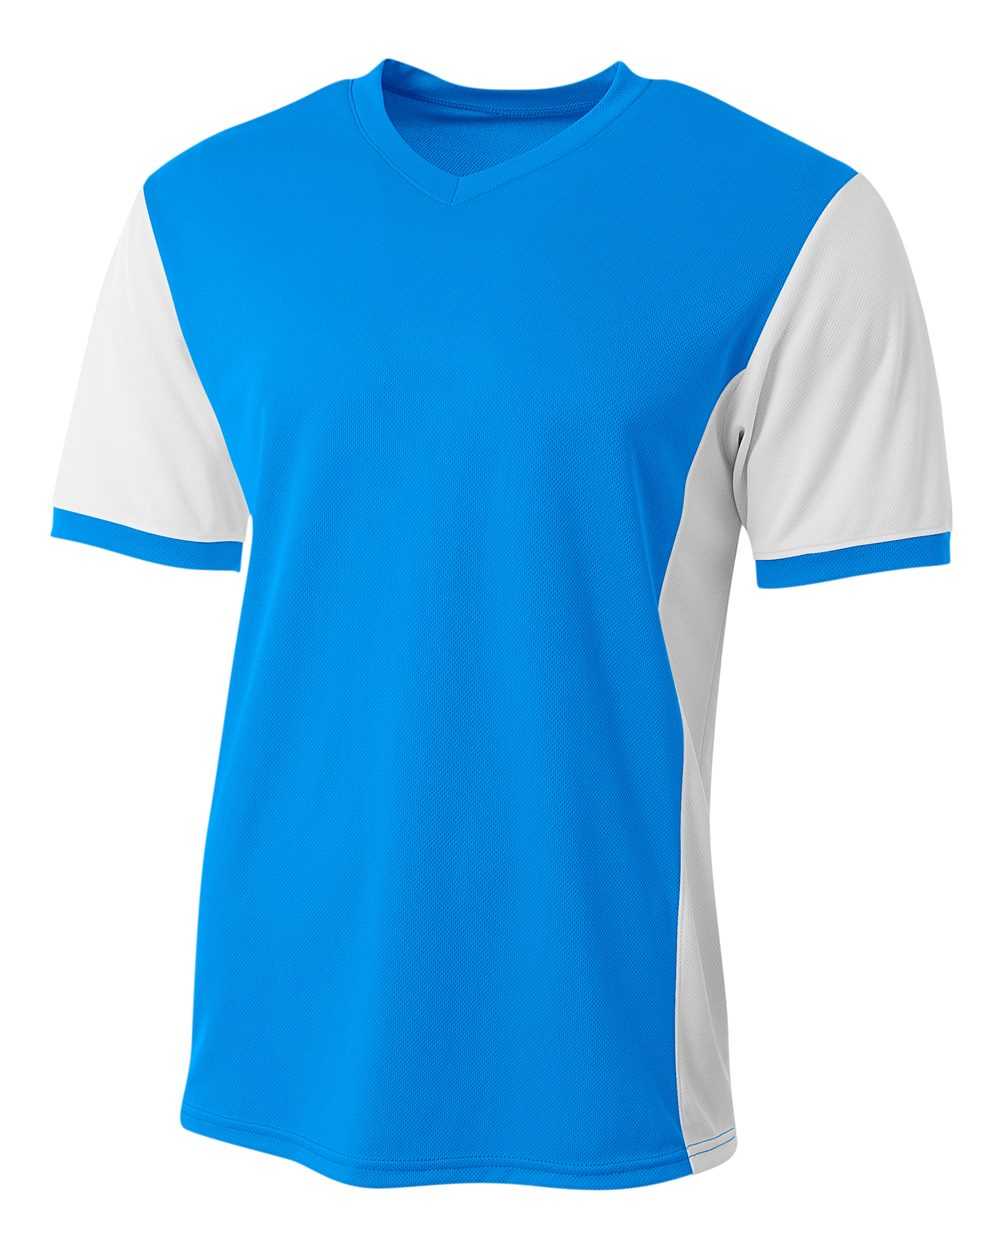 A4 NB3017 Premier Soccer Jersey - Electric Blue White - HIT a Double